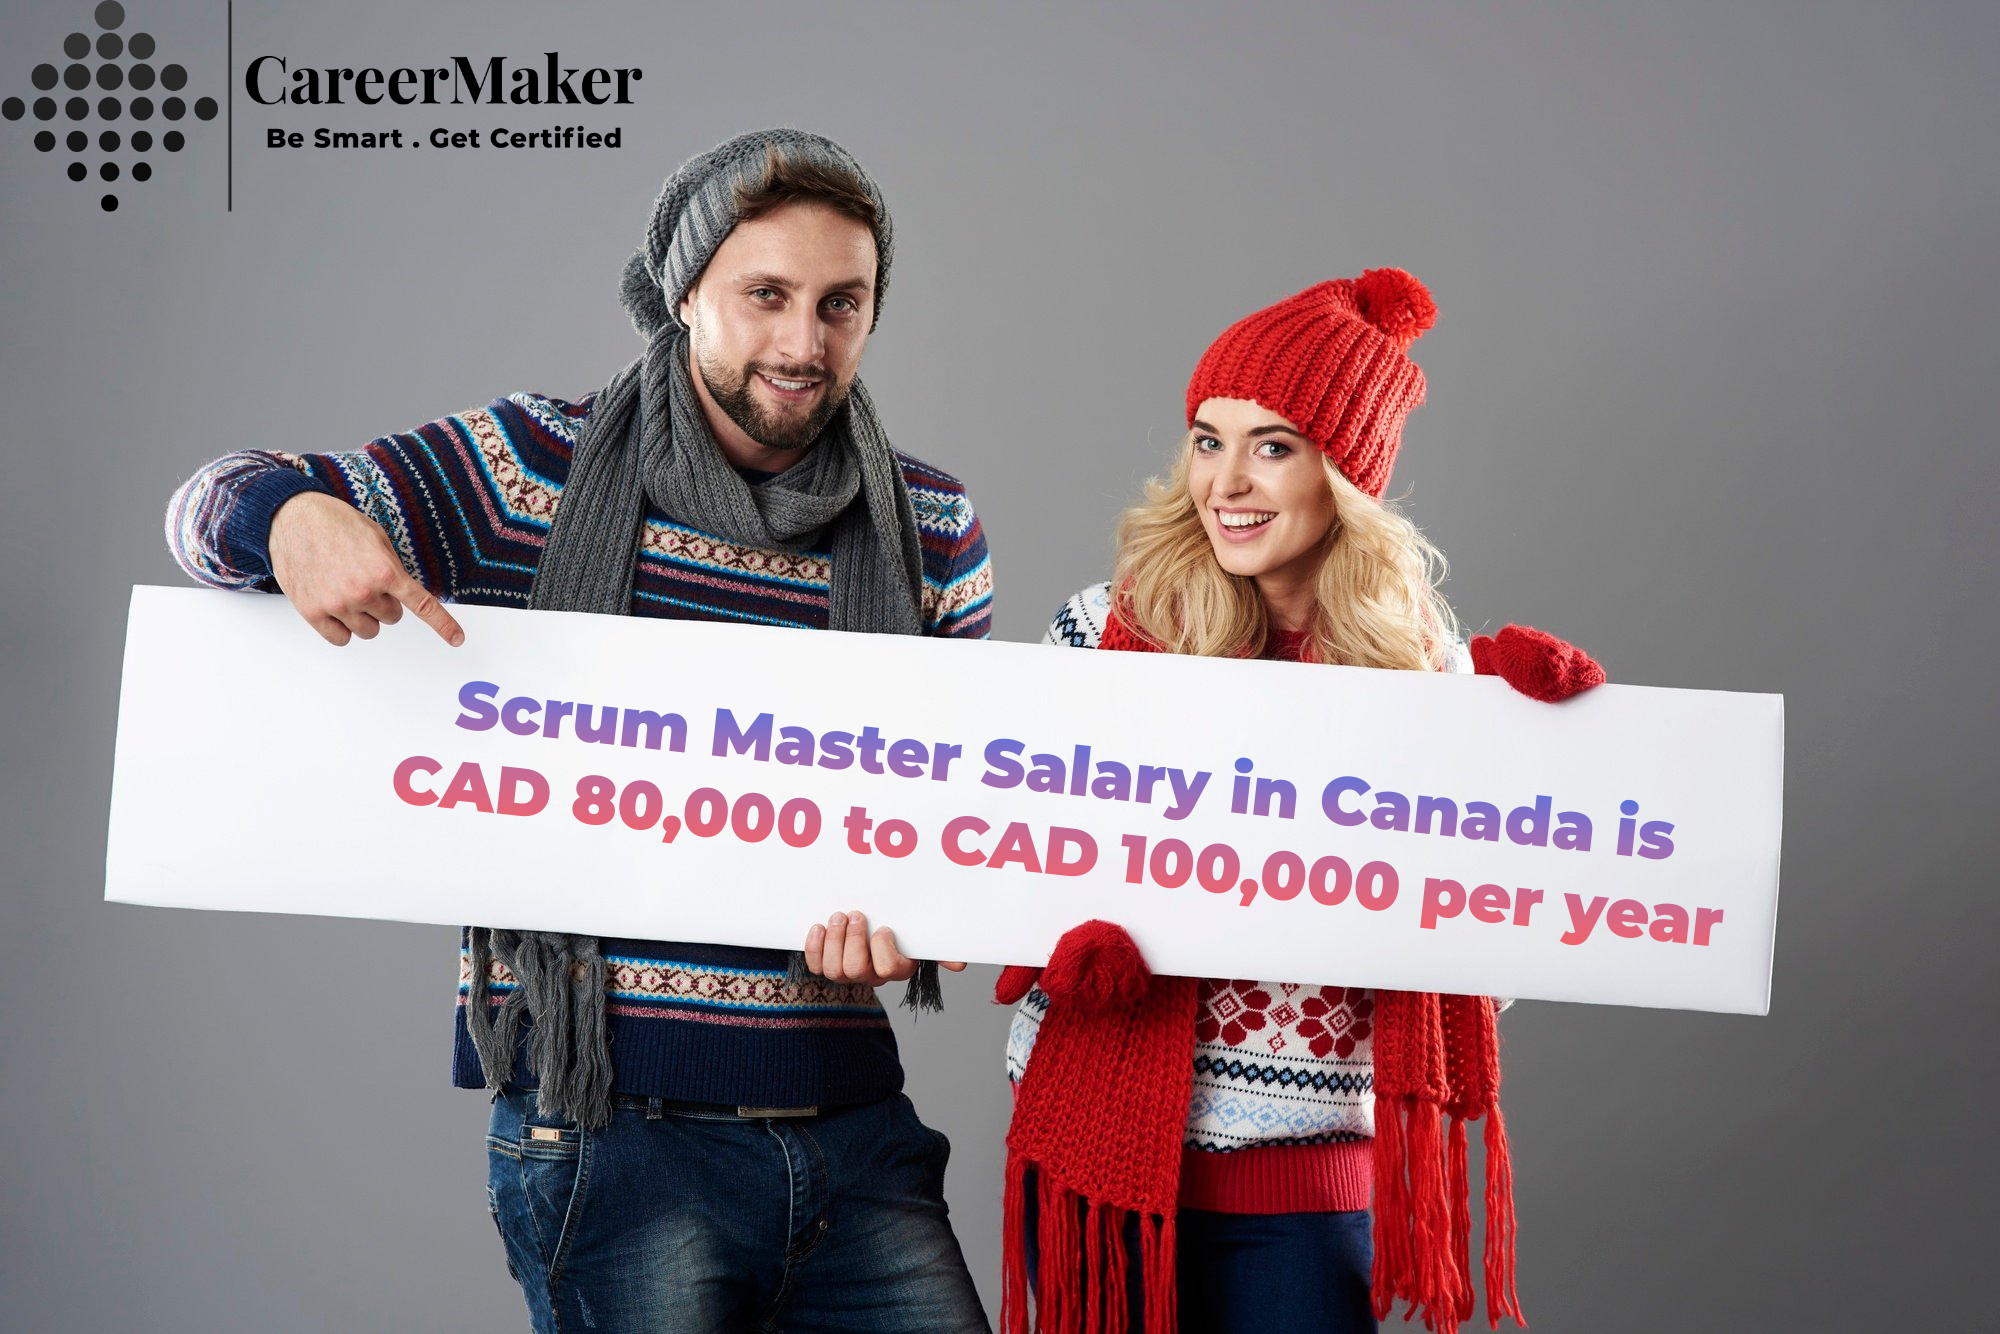 Scrum Master Salary in Canada